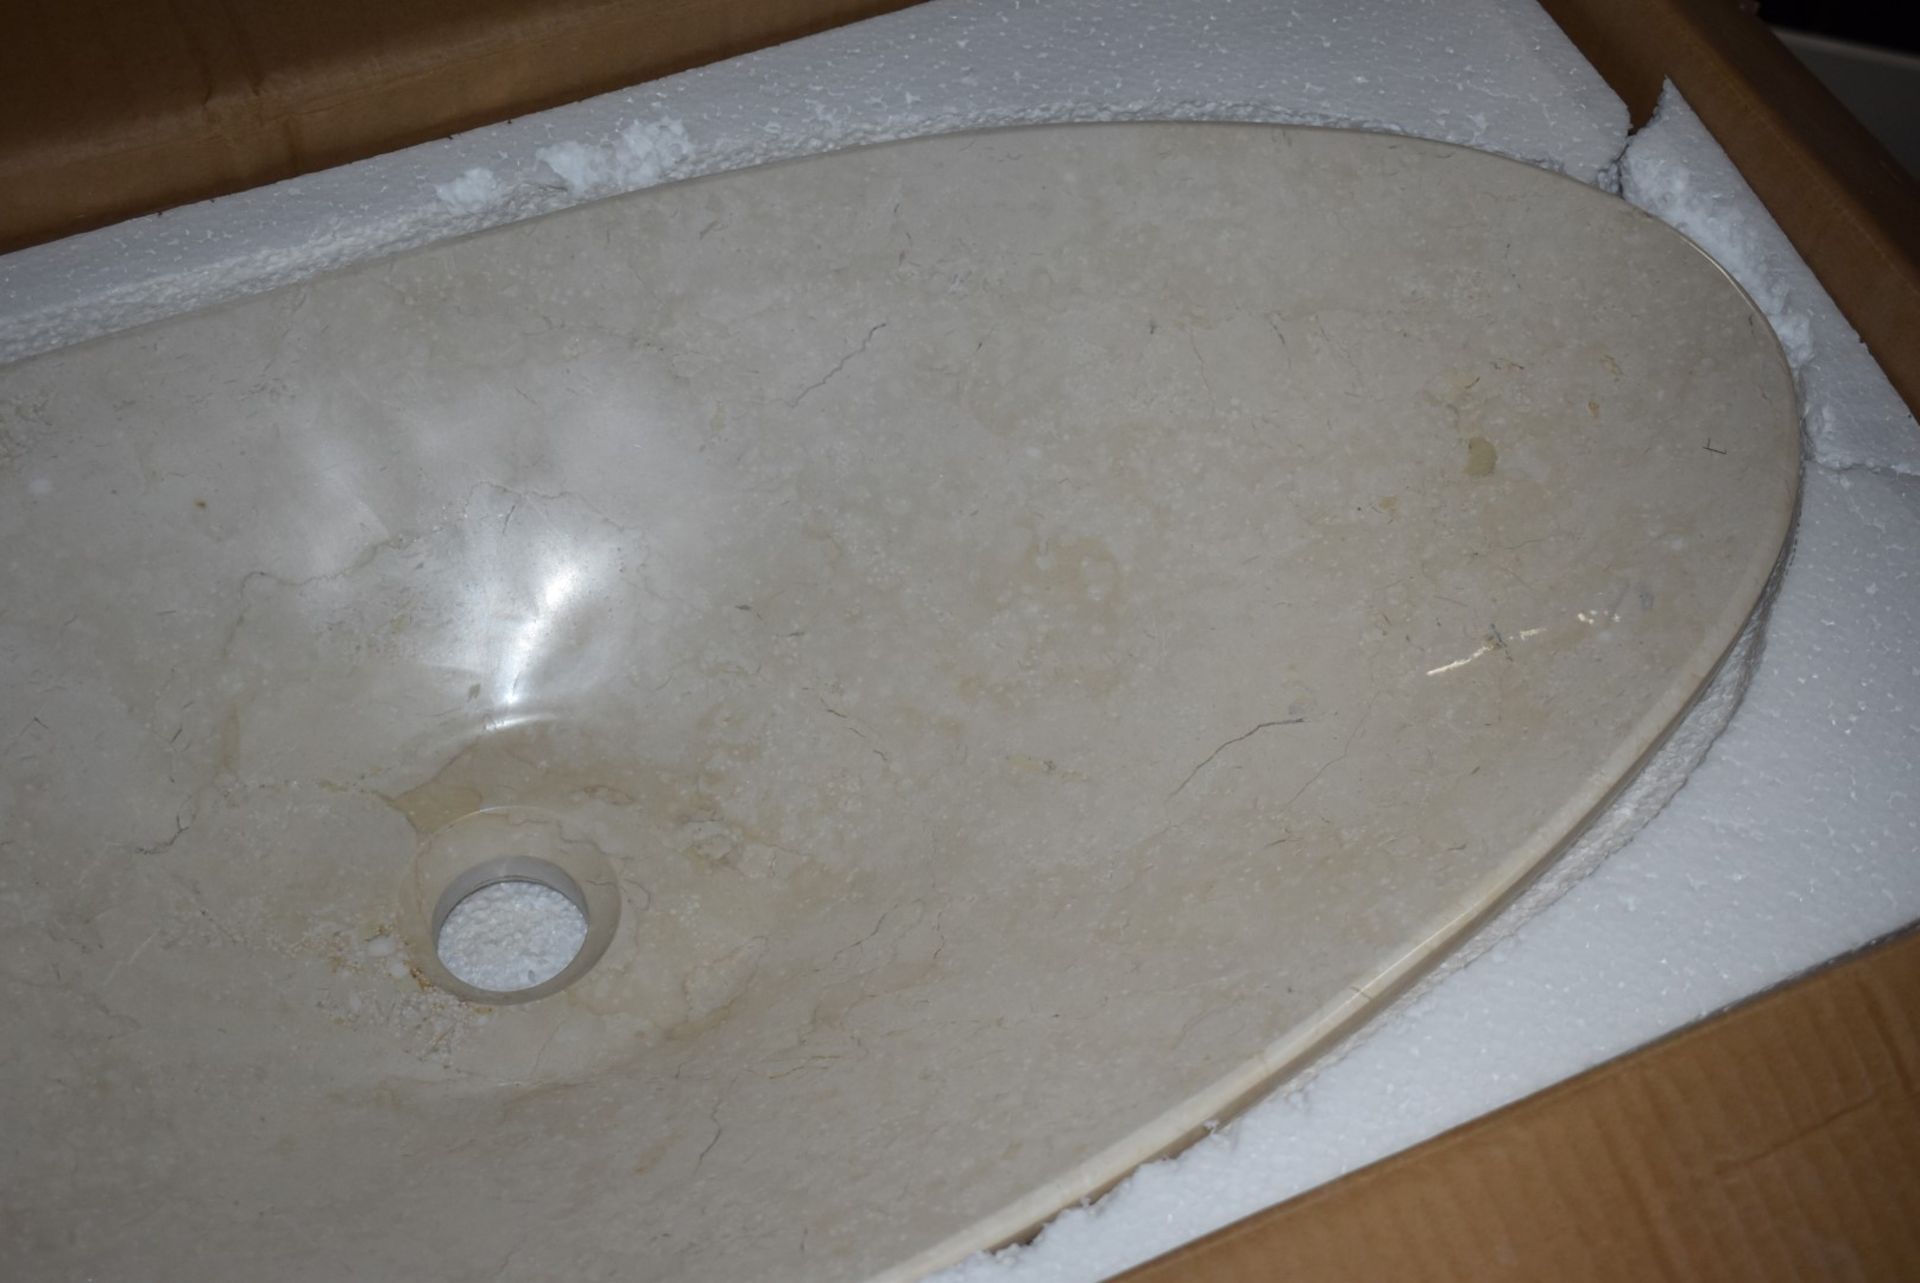 1 x Stonearth 'Cyra' Black Galala Marble Stone Countertop Sink Basin - New Boxed Stock - RRP £ - Image 7 of 7